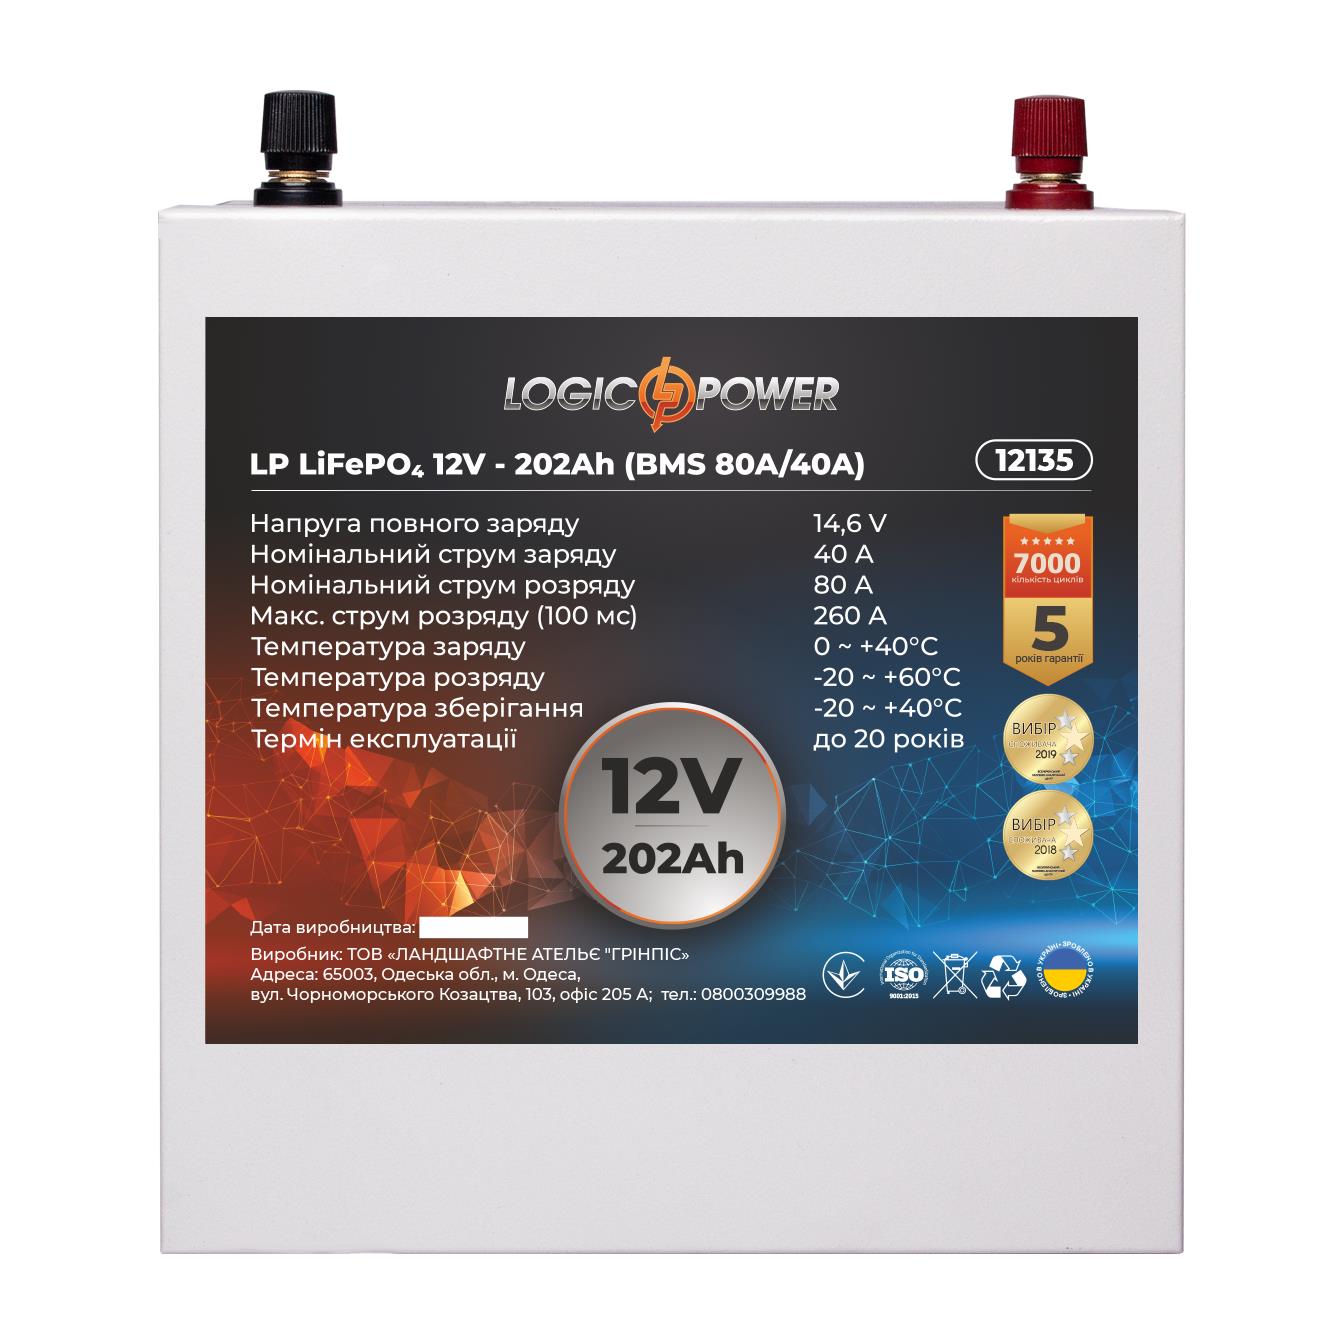 LogicPower LP LiFePO4 12V - 202 Ah (BMS 80A/40A) метал (12135)